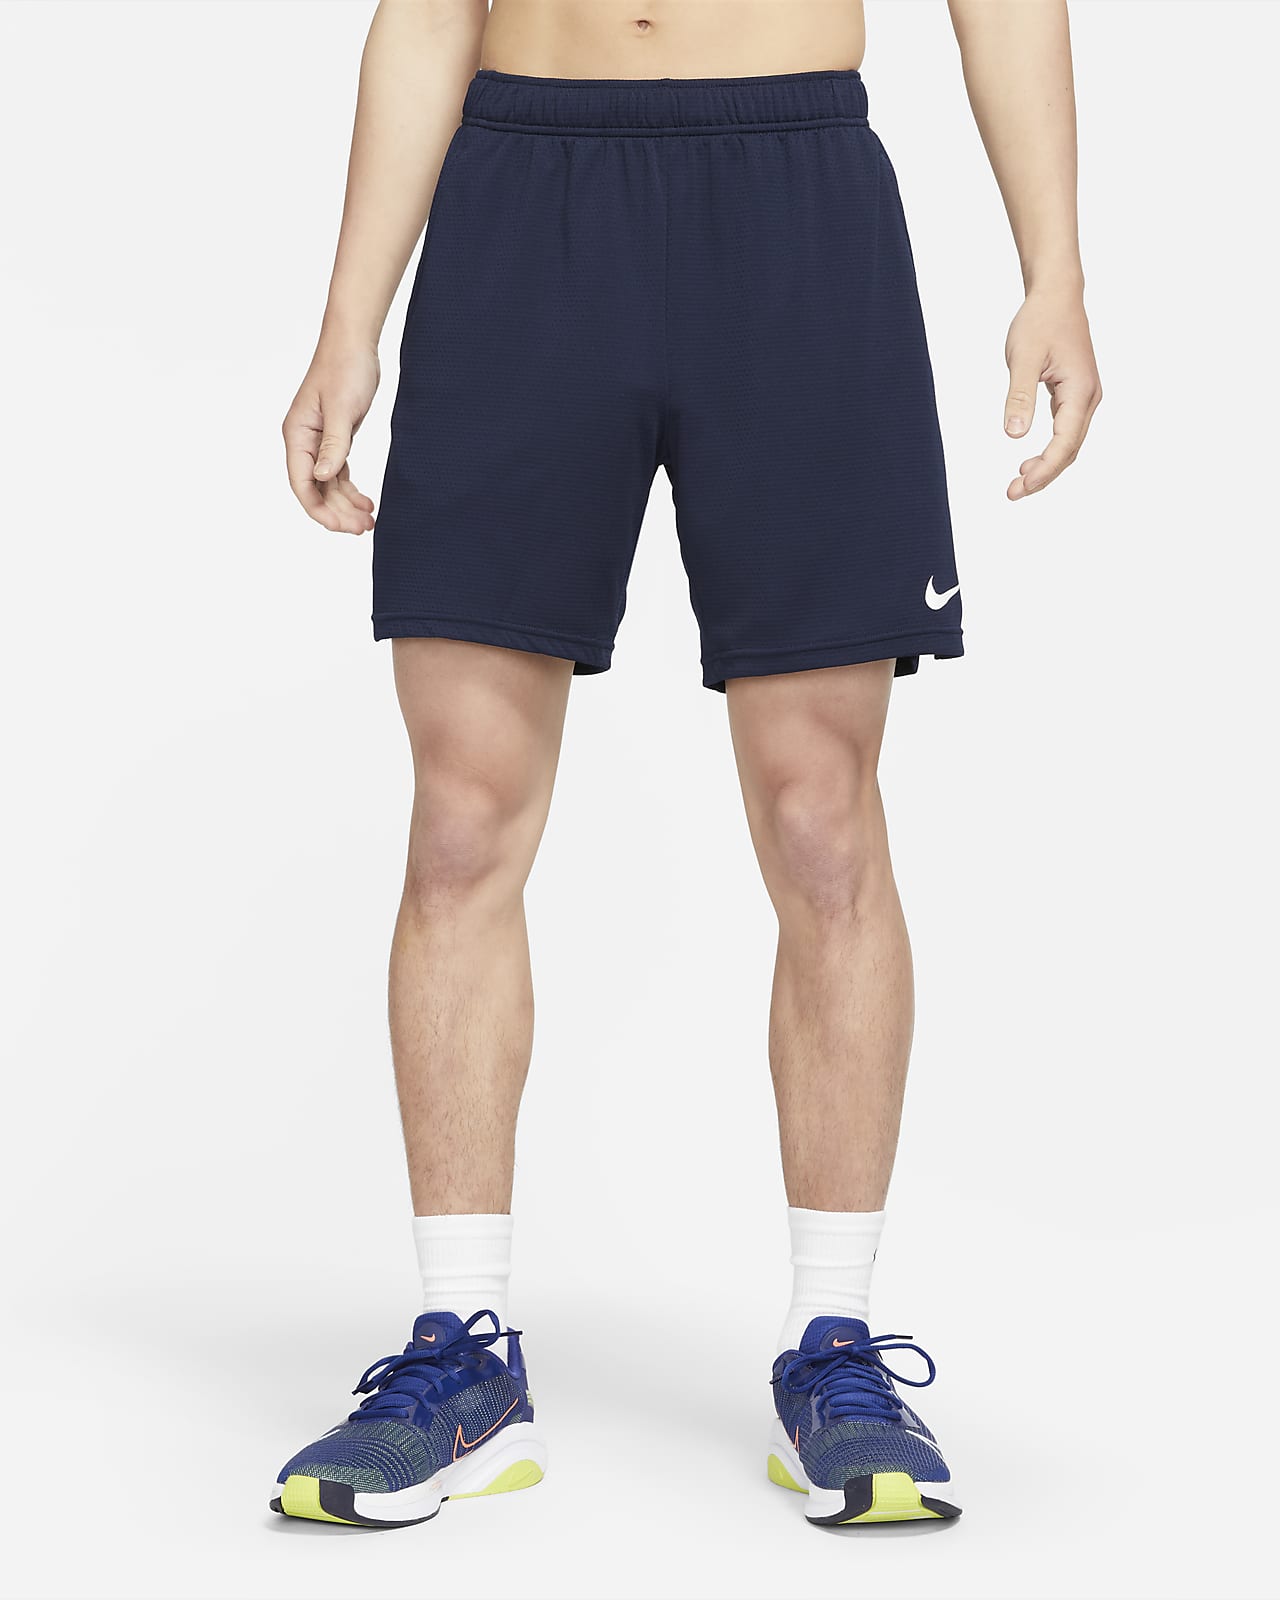 Men's Mesh Shorts. Nike ID